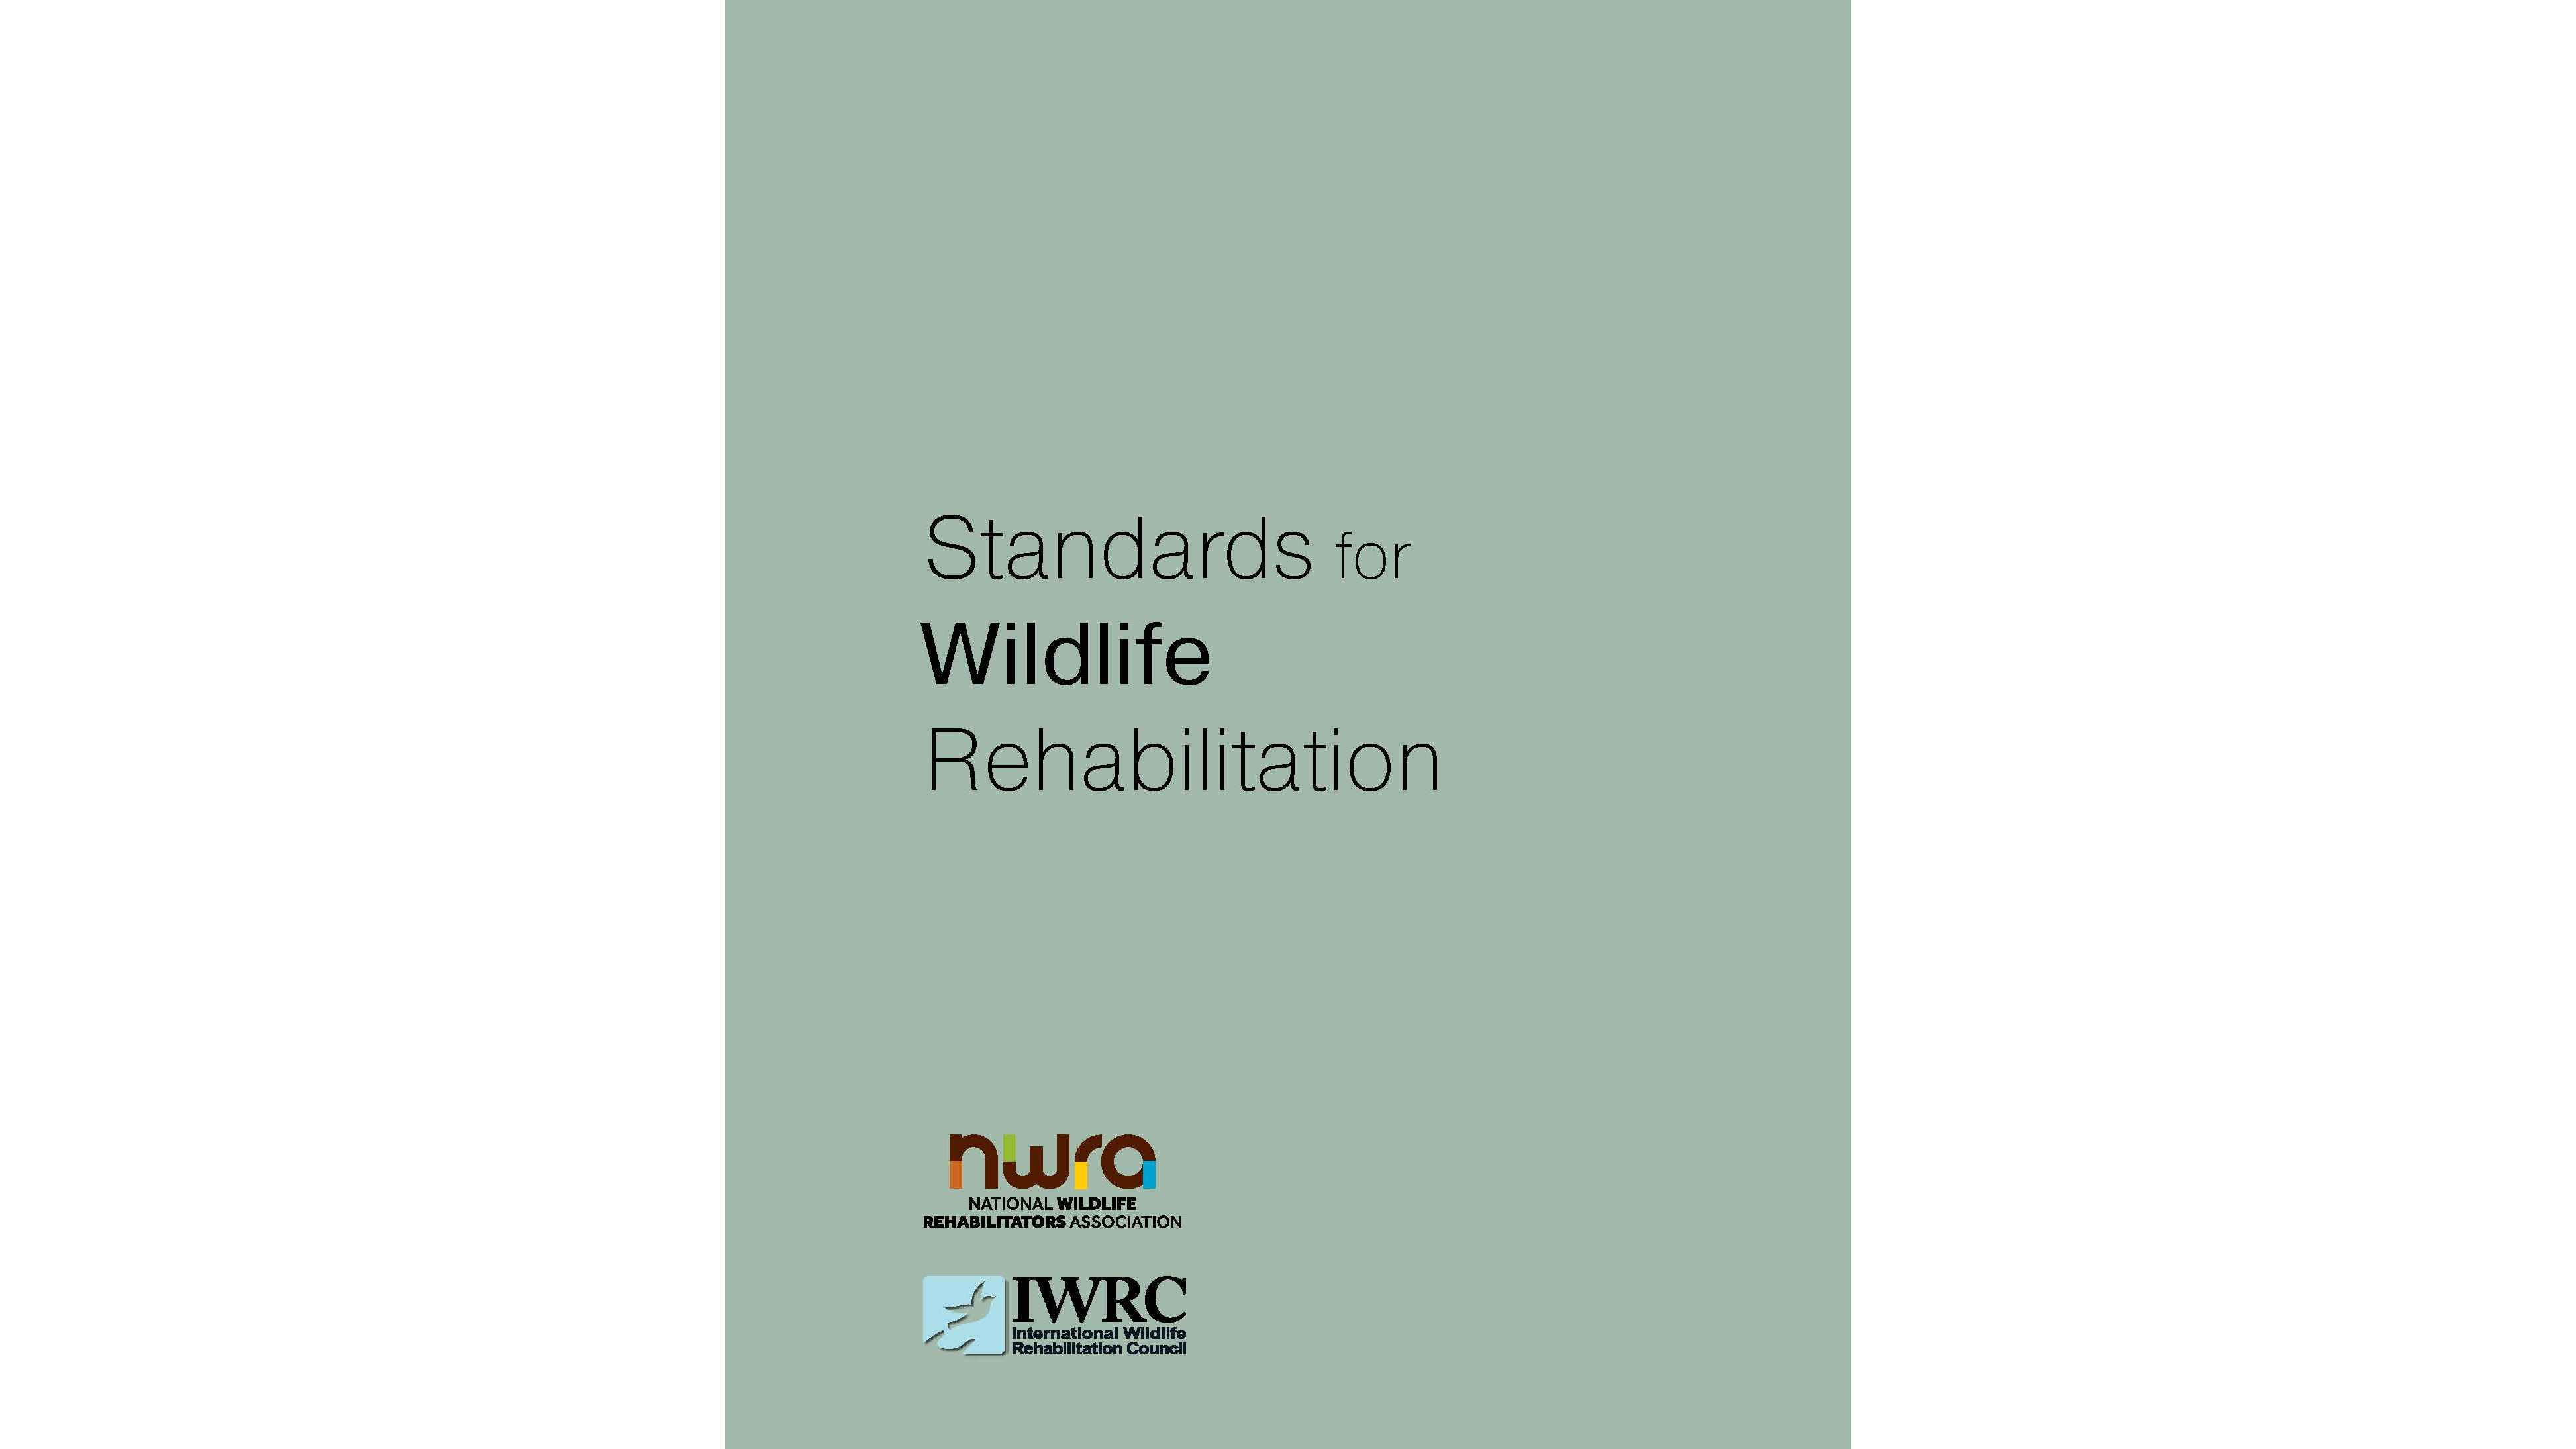 The International Wildlife Rehabilitation Council